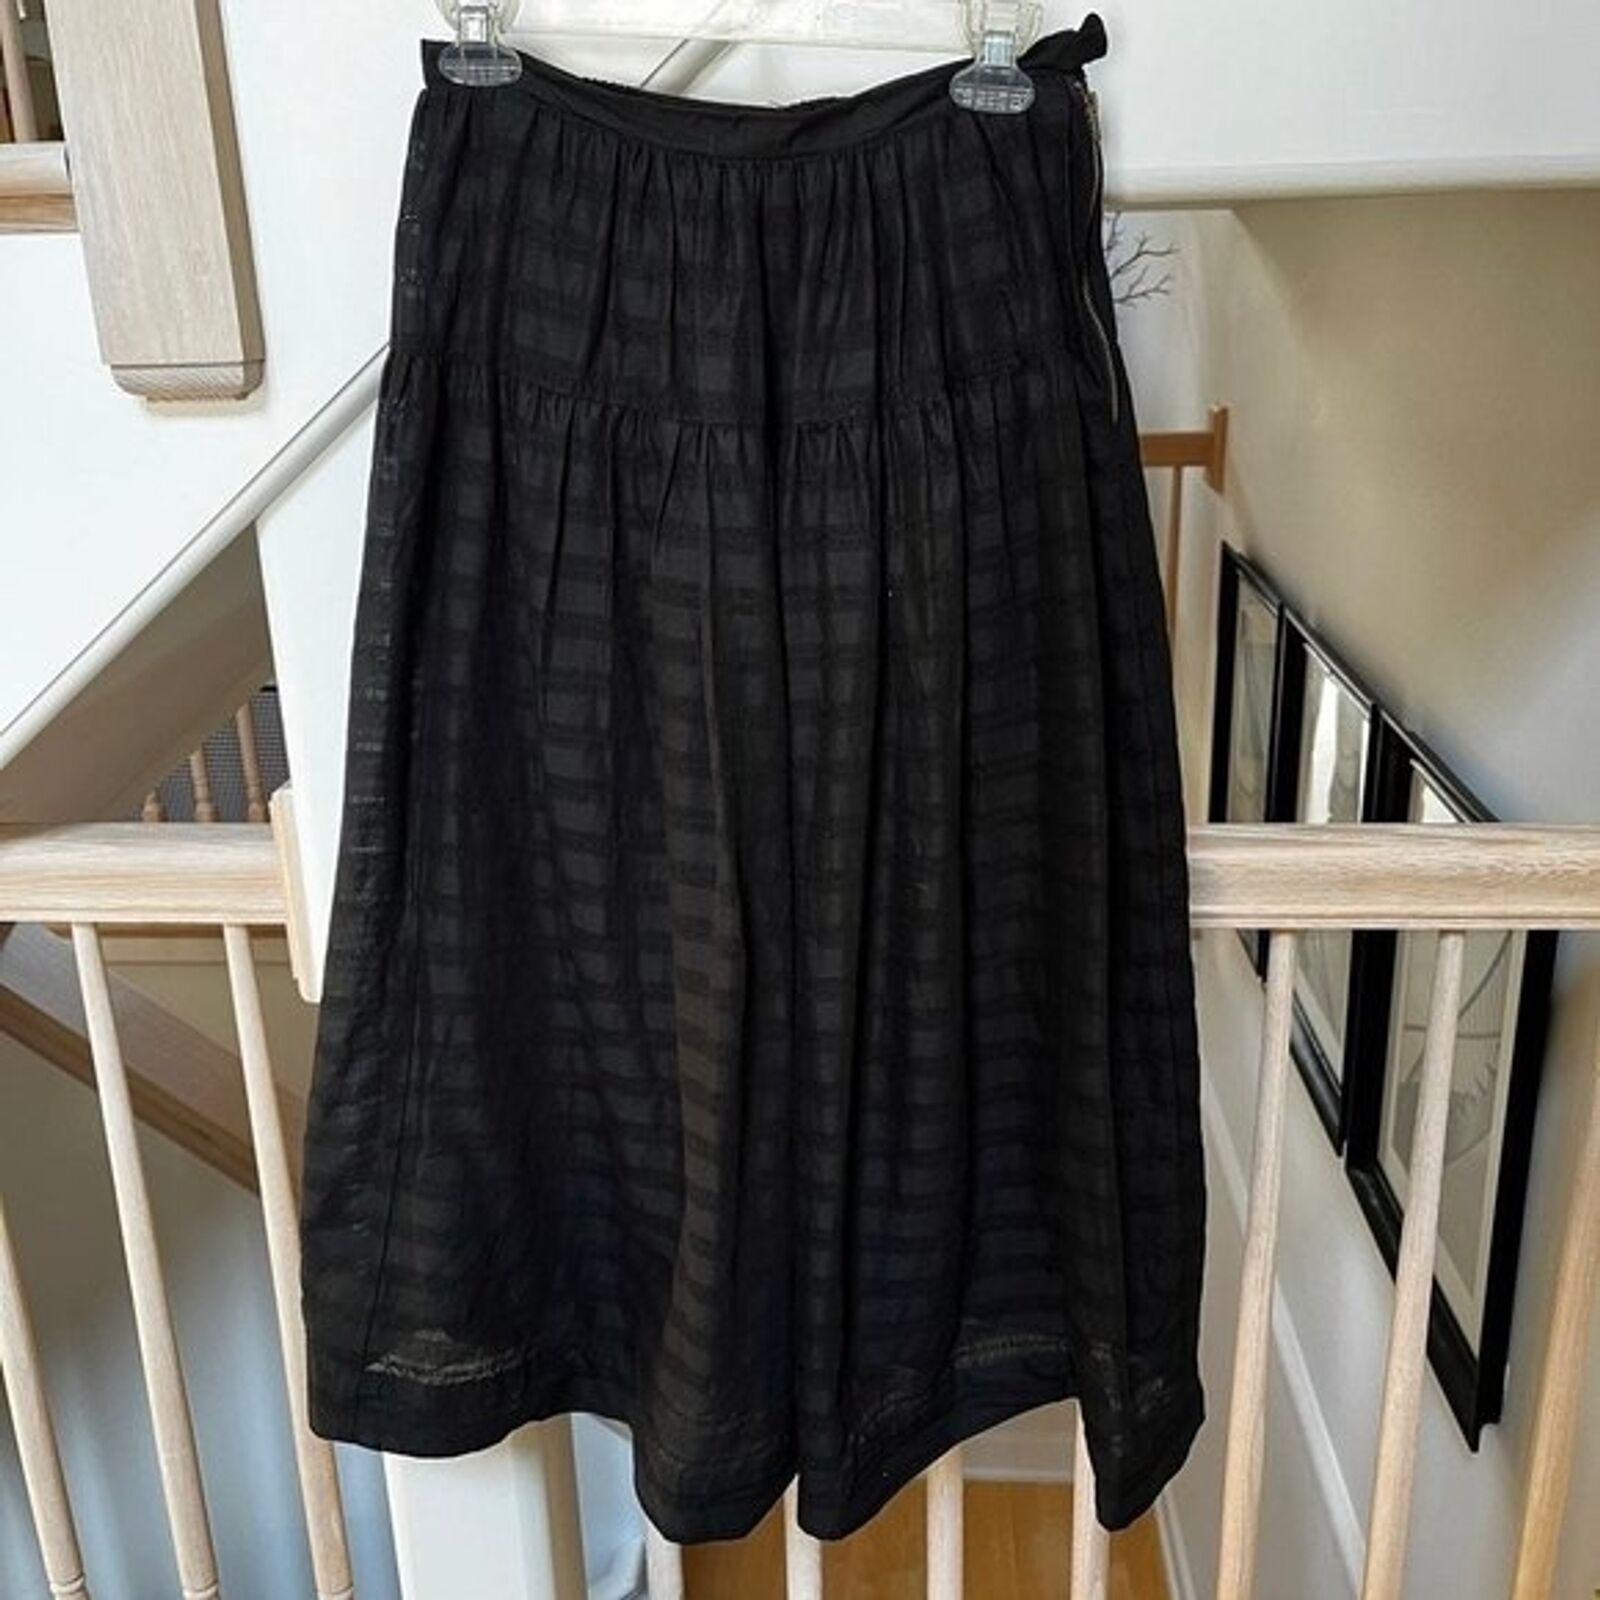 Heidi Merrick Cedar Midi Skirt in Black 0 - image 6